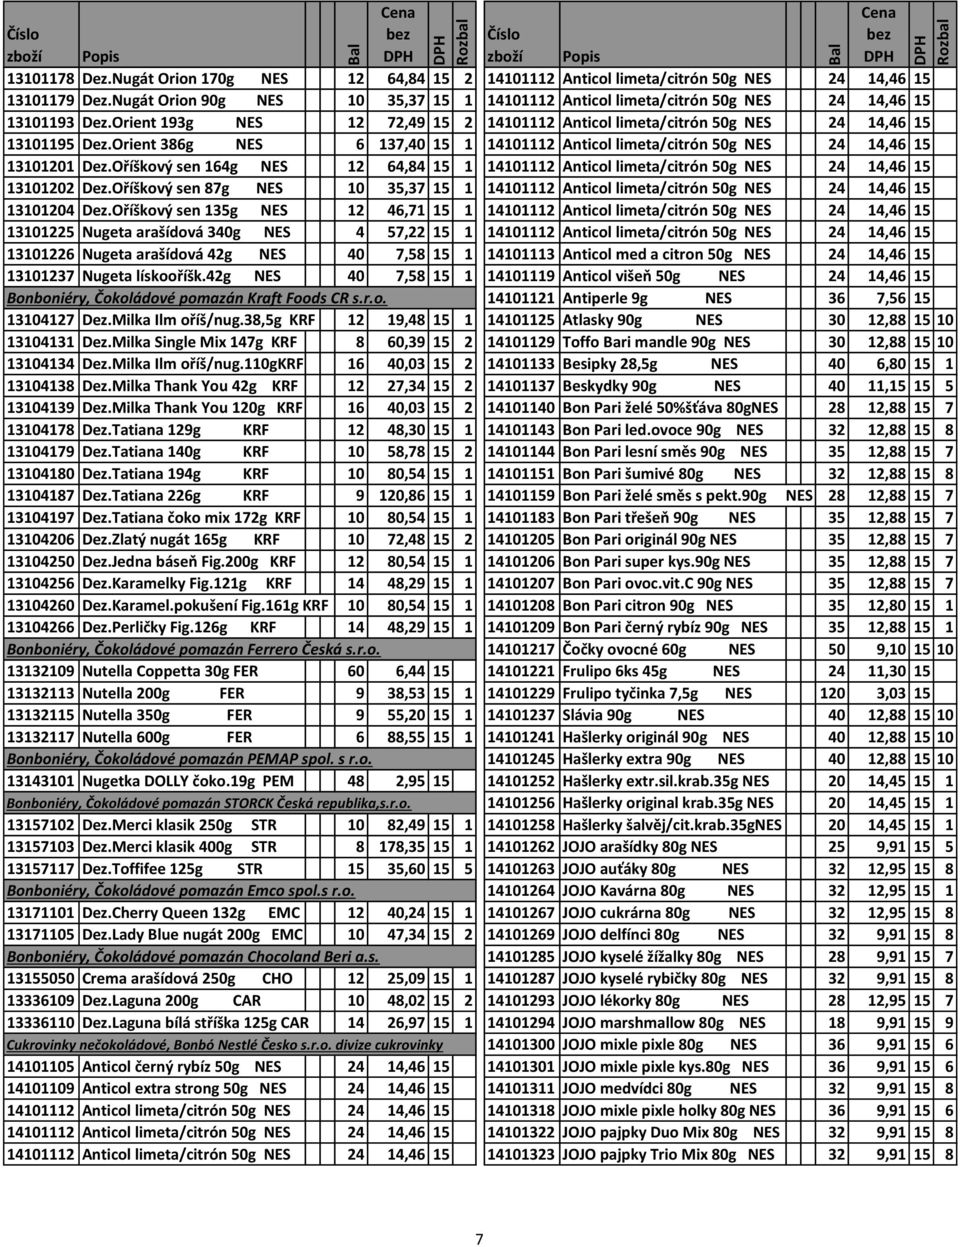 Orient 386g NES 6 137,40 15 1 14101112 Anticol limeta/citrón 50g NES 24 14,46 15 13101201 Dez.Oříškový sen 164g NES 12 64,84 15 1 14101112 Anticol limeta/citrón 50g NES 24 14,46 15 13101202 Dez.